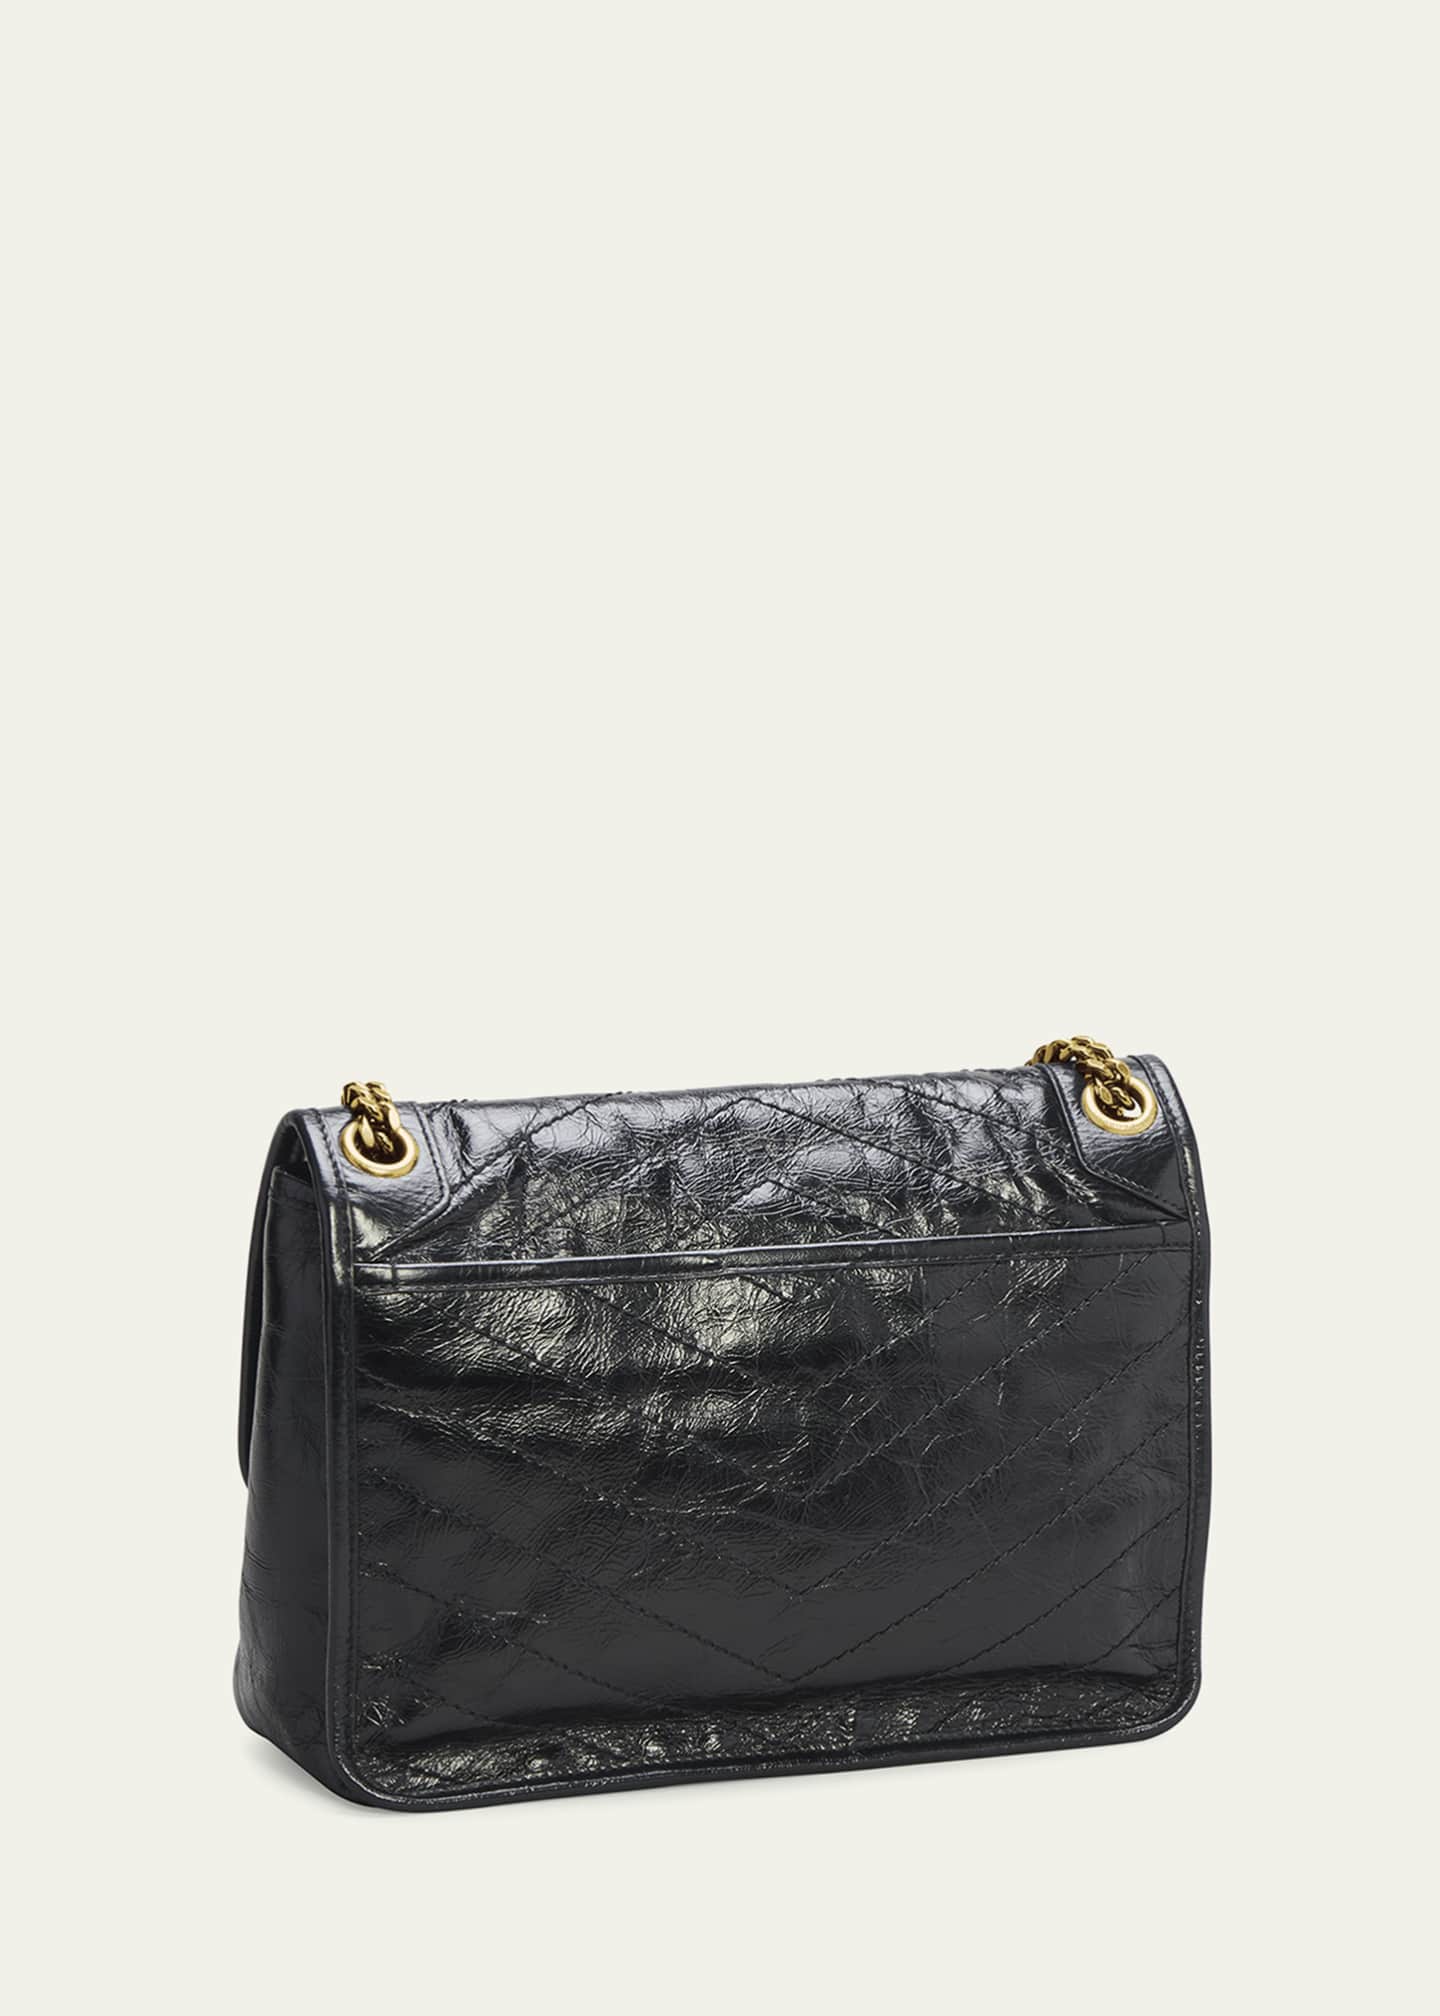 Saint Laurent Niki Medium Leather Shoulder Bag - Womens - Black